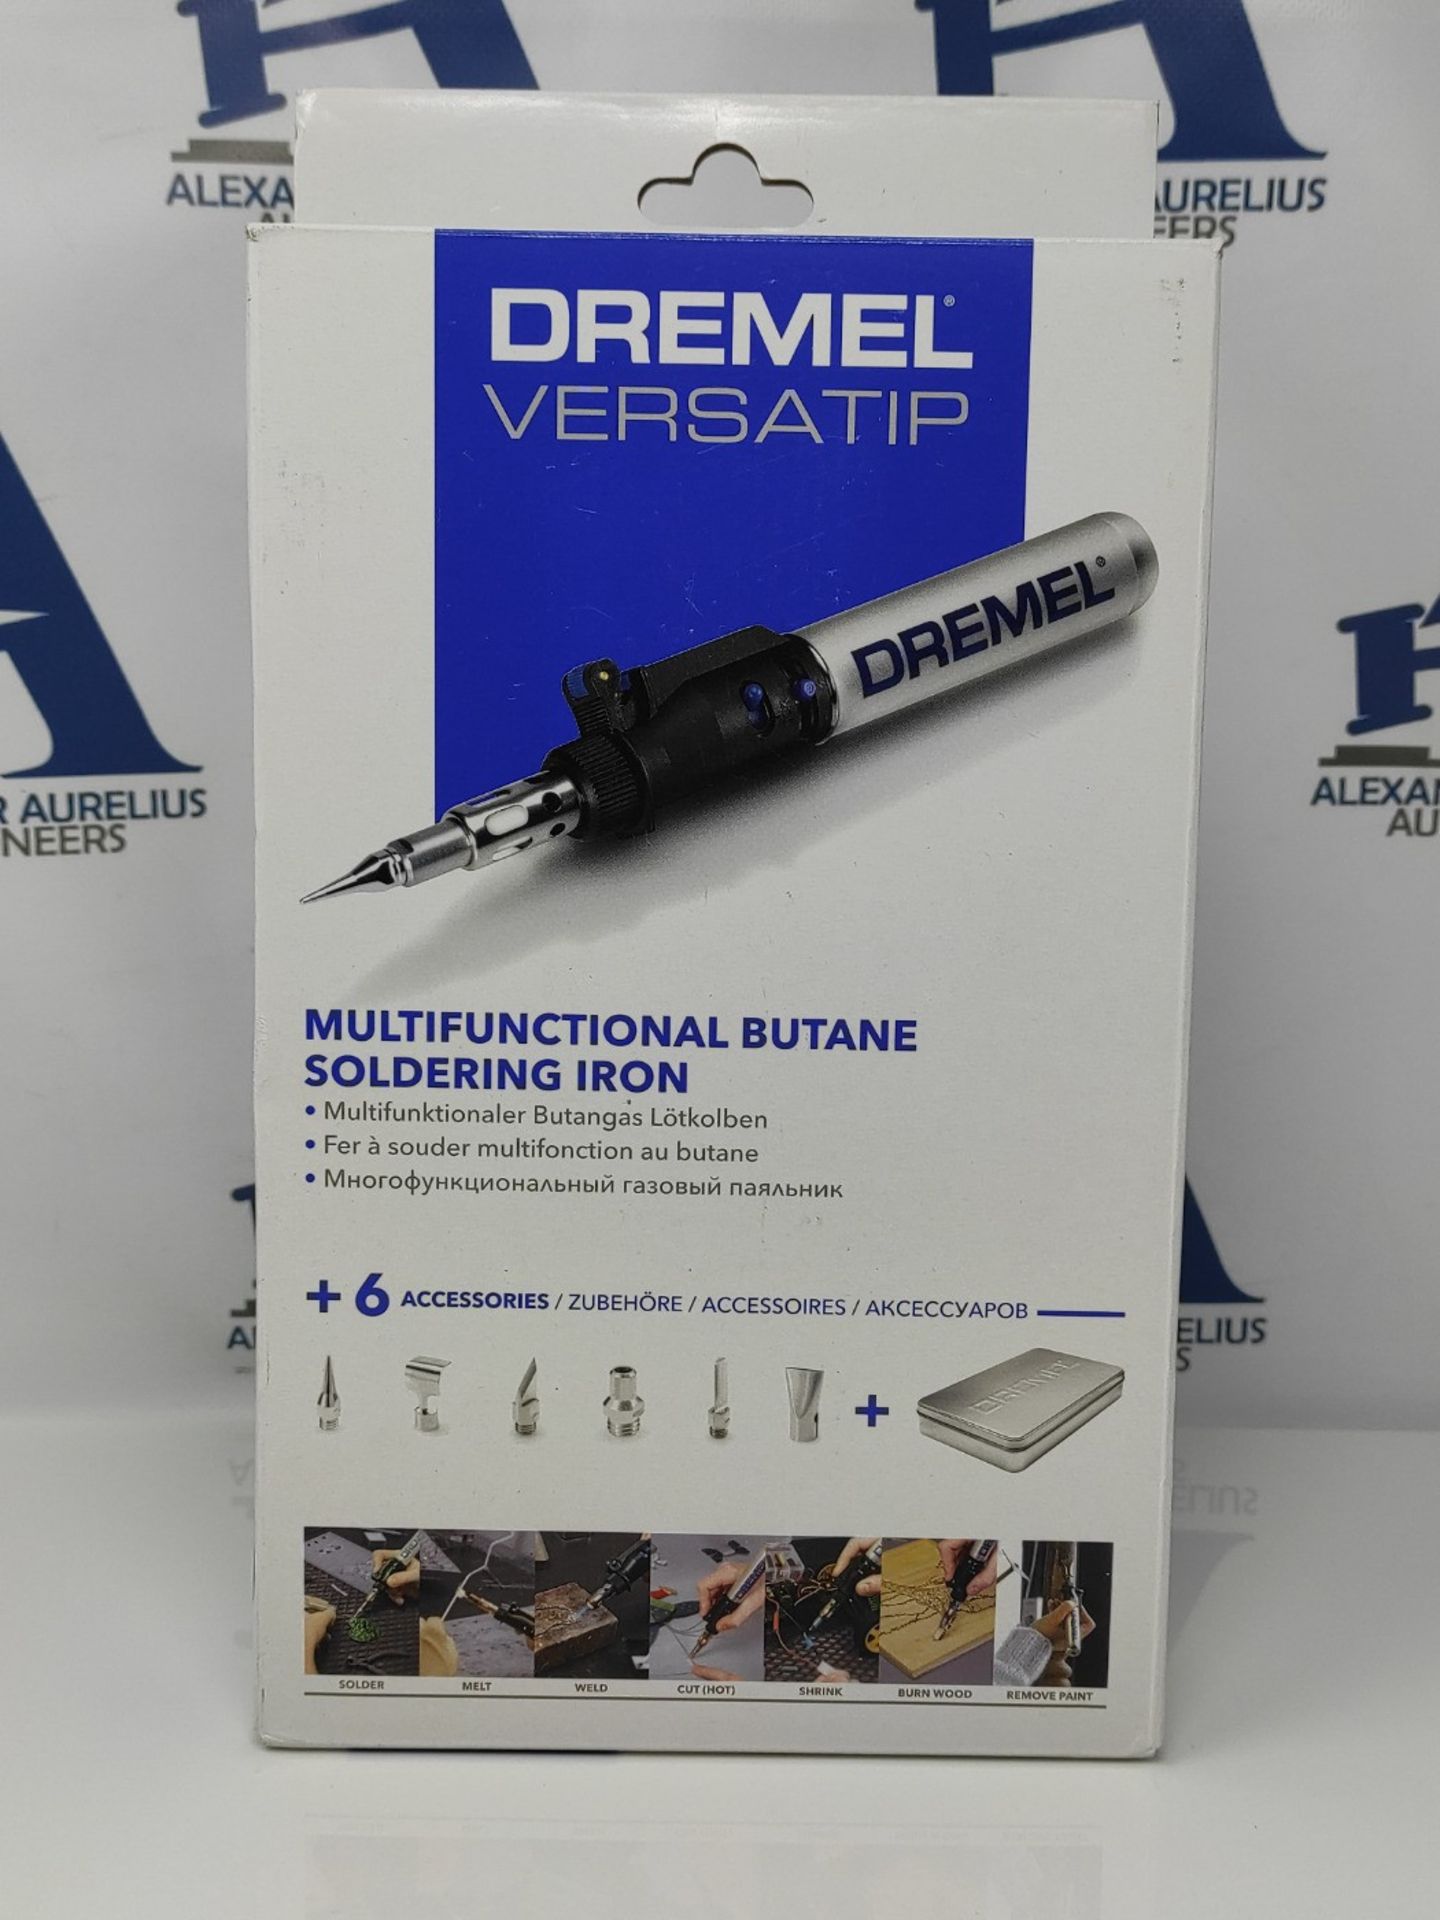 Dremel Versatip 2000 Cordless Soldering Iron - Butane Gas Soldering Kit with 6 Interch - Image 2 of 3